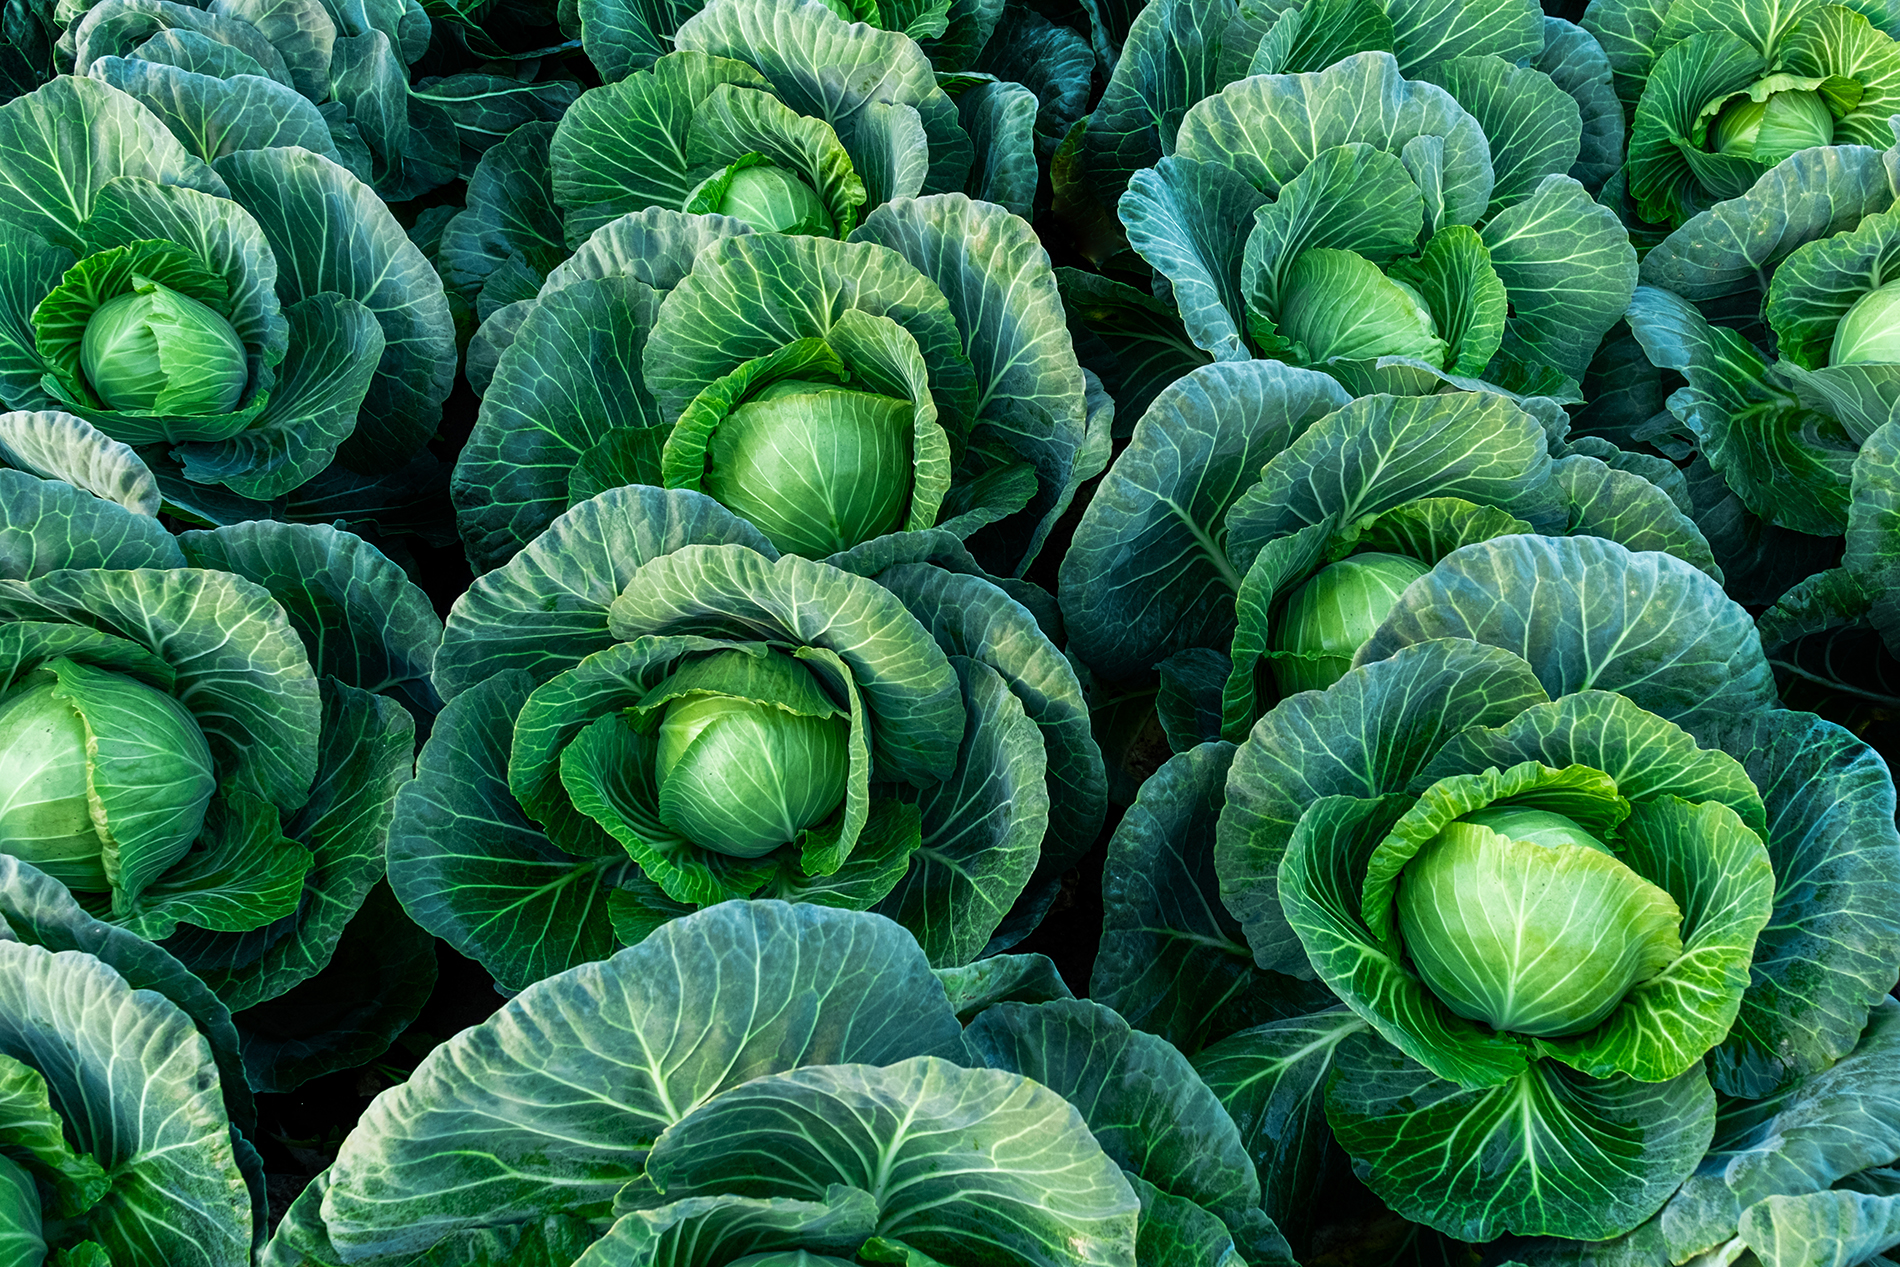 Many heads of dark green cabbage